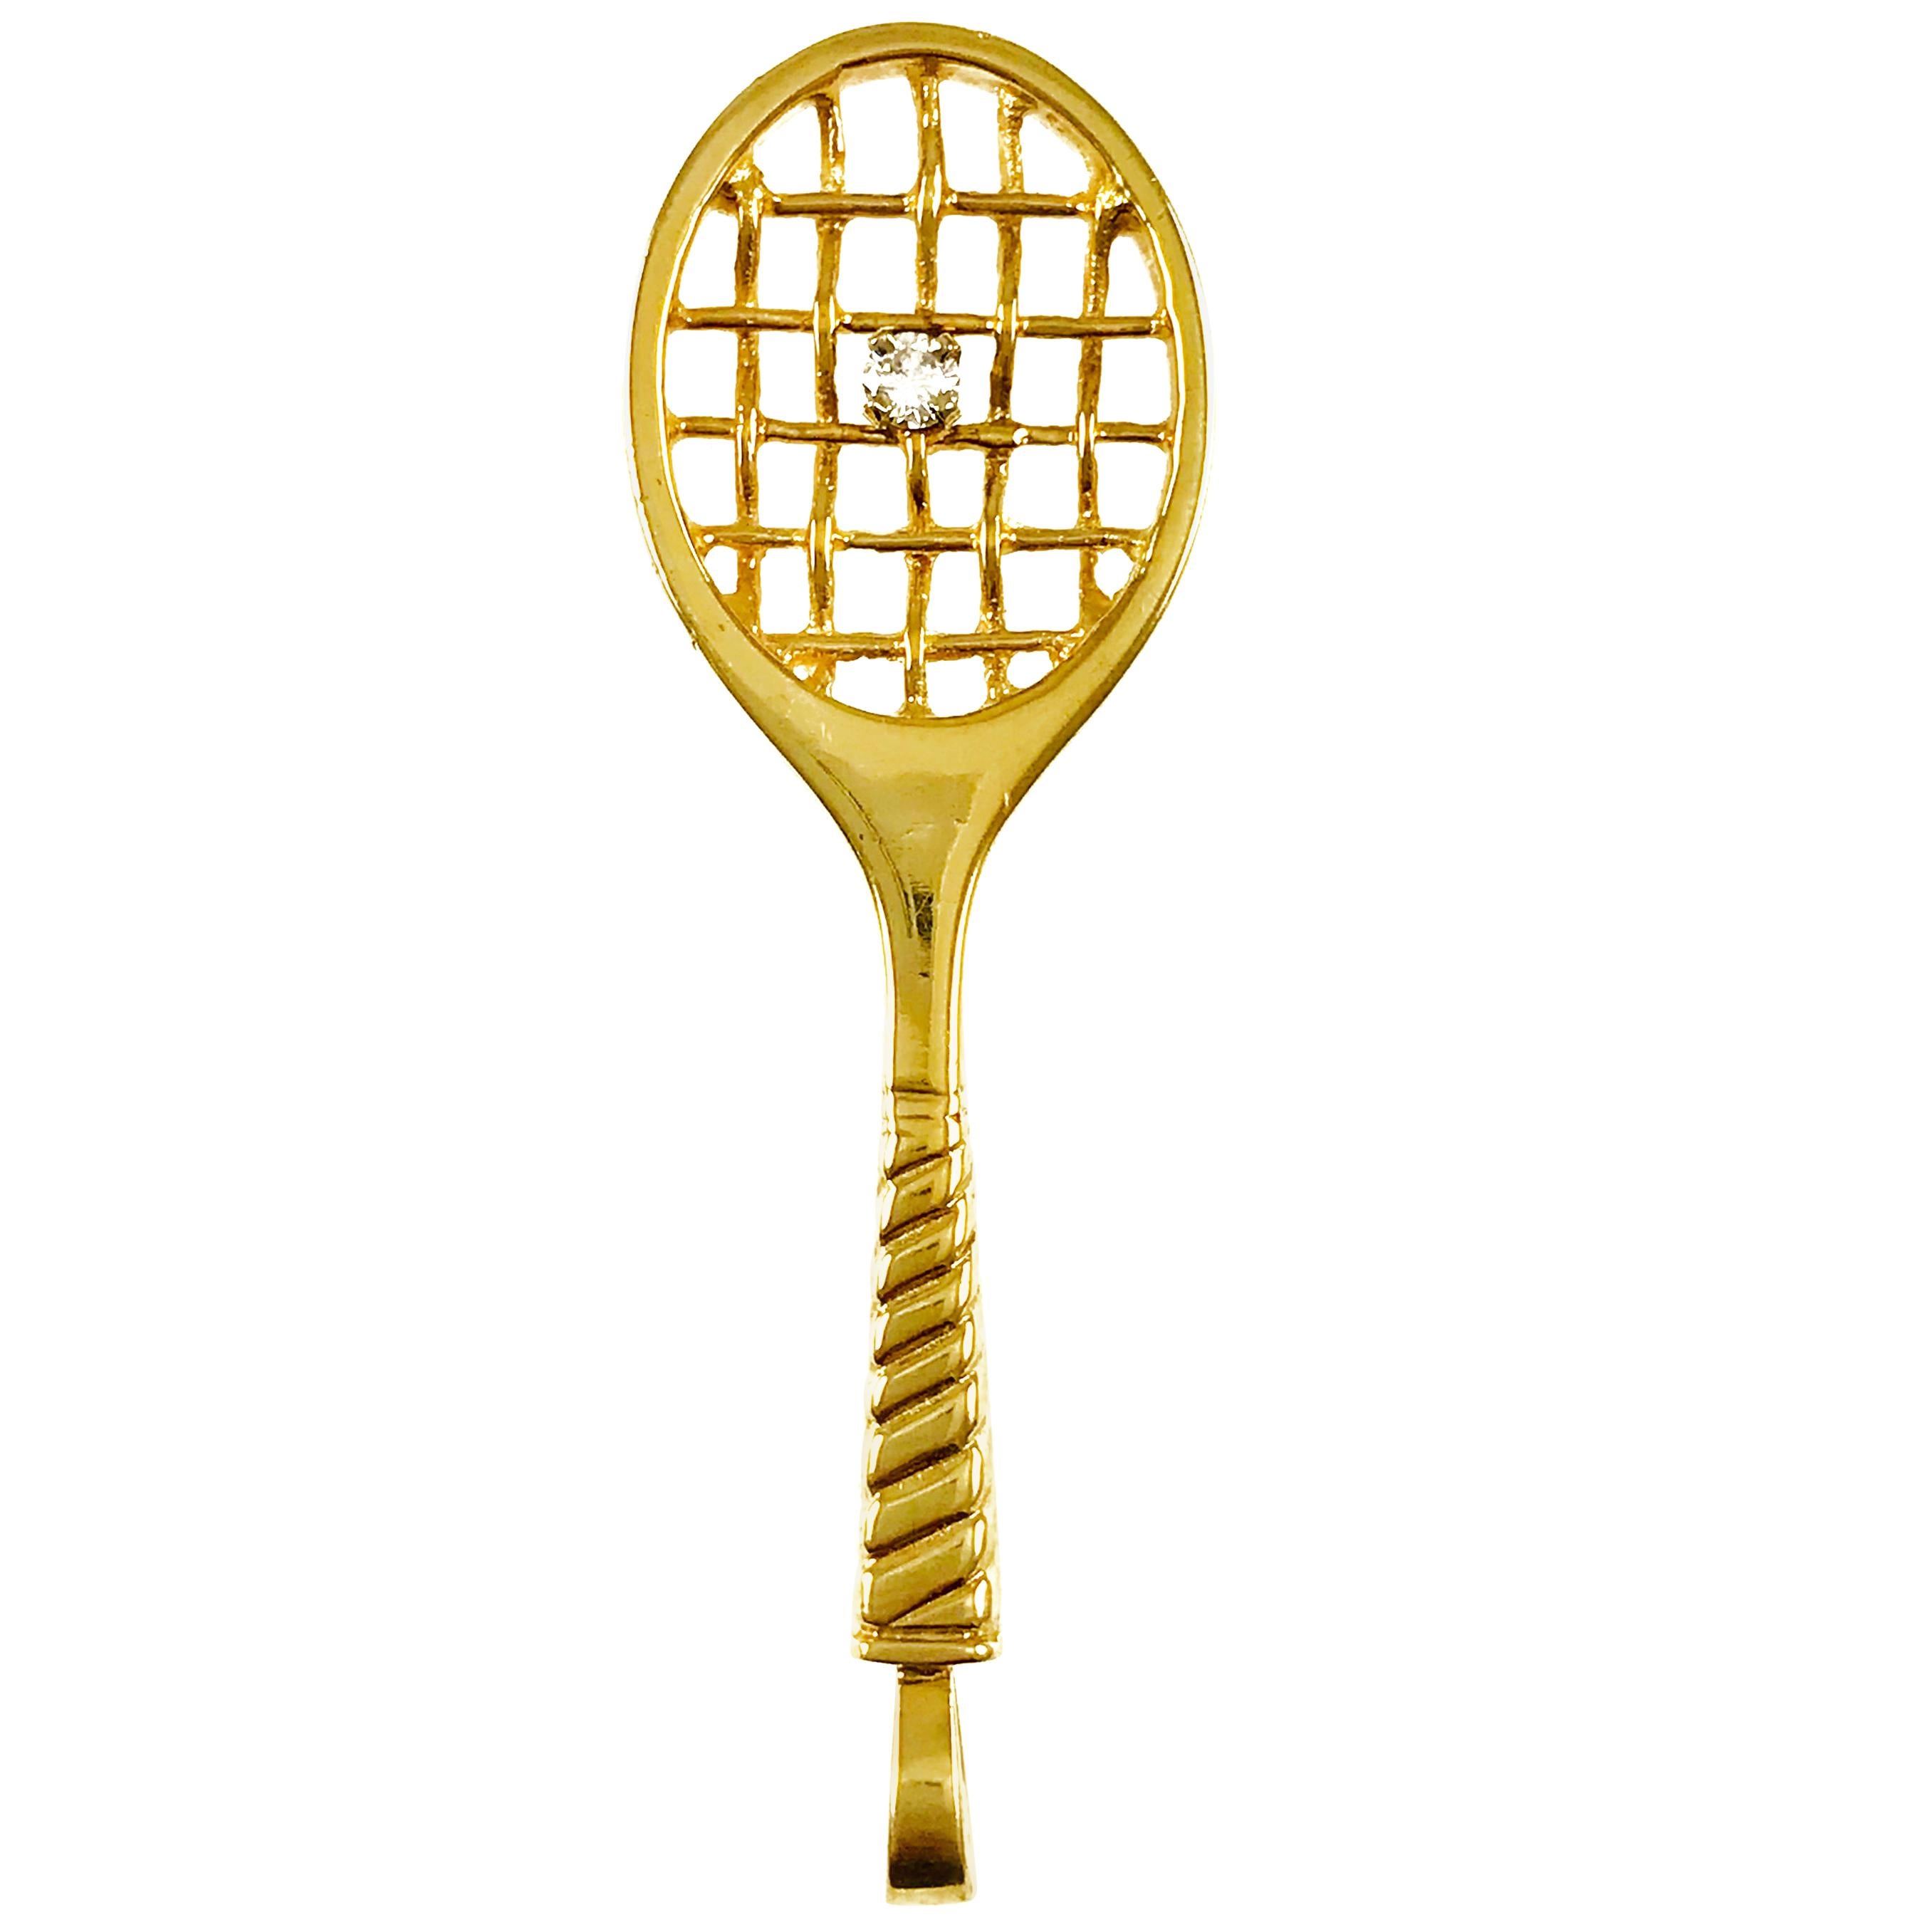 Incogem Pendentif raquette de tennis en or jaune et diamants